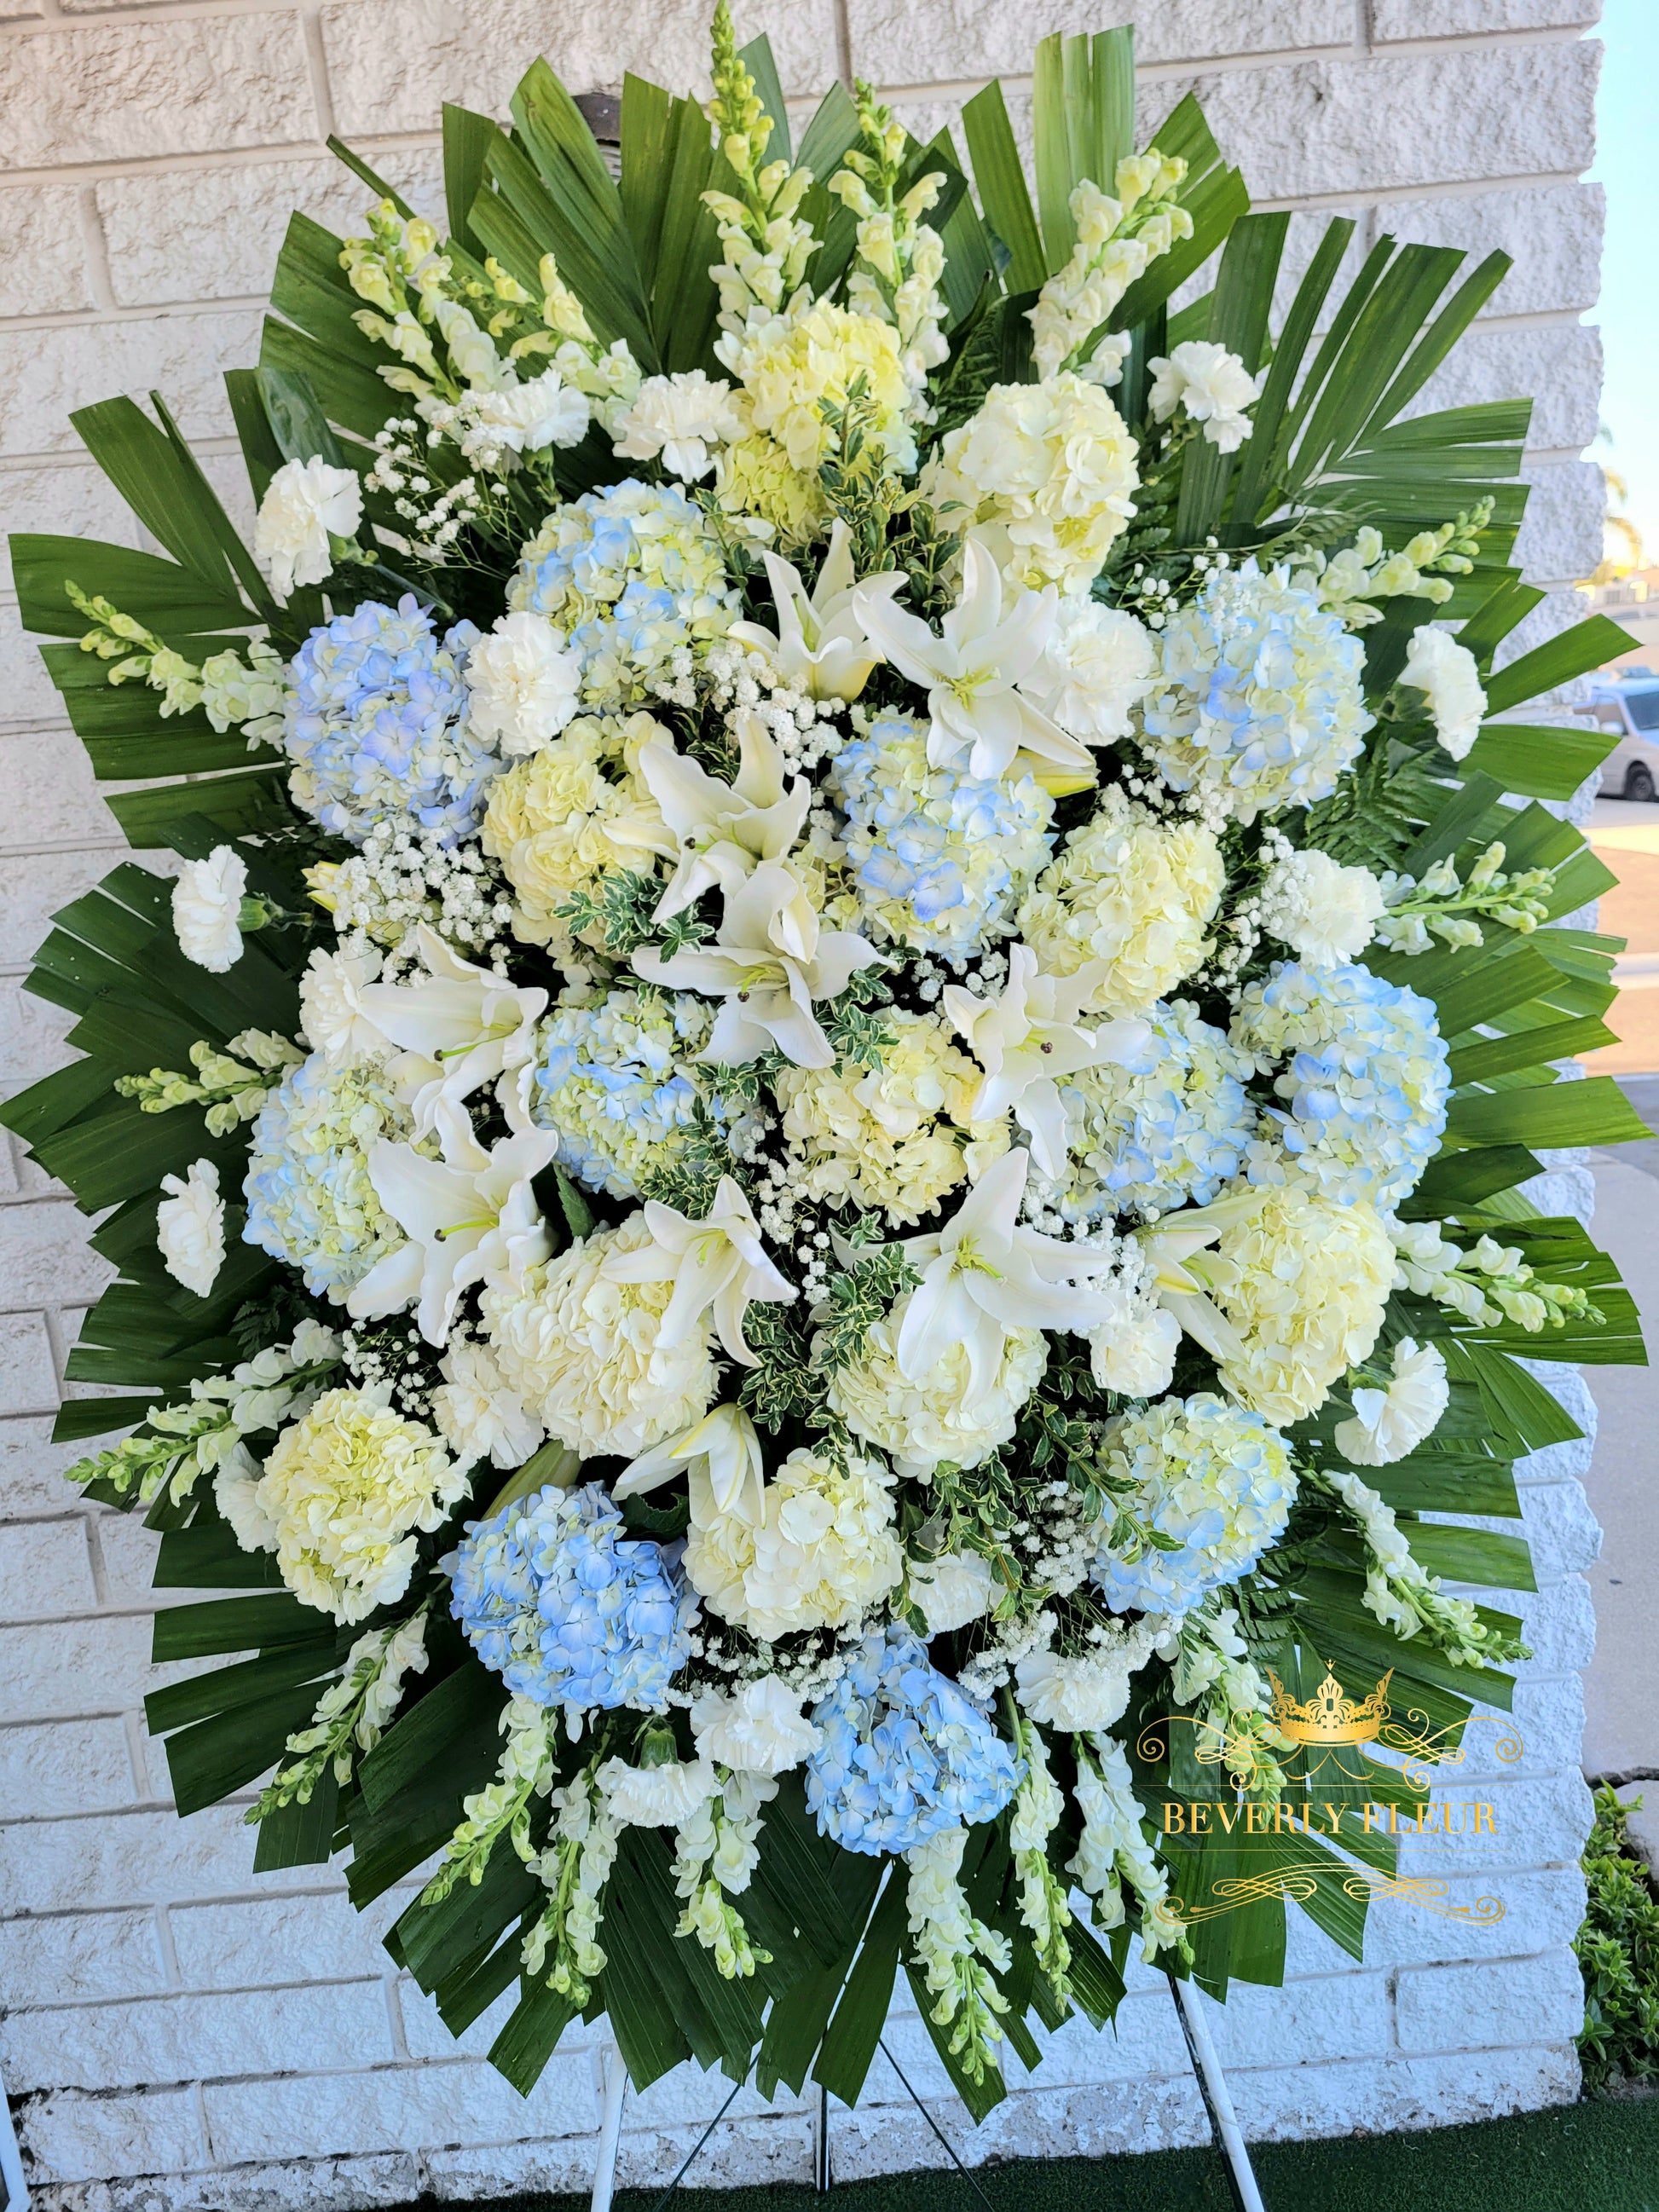 Vietnamese Bolsa Flowers - Funeral Flowers